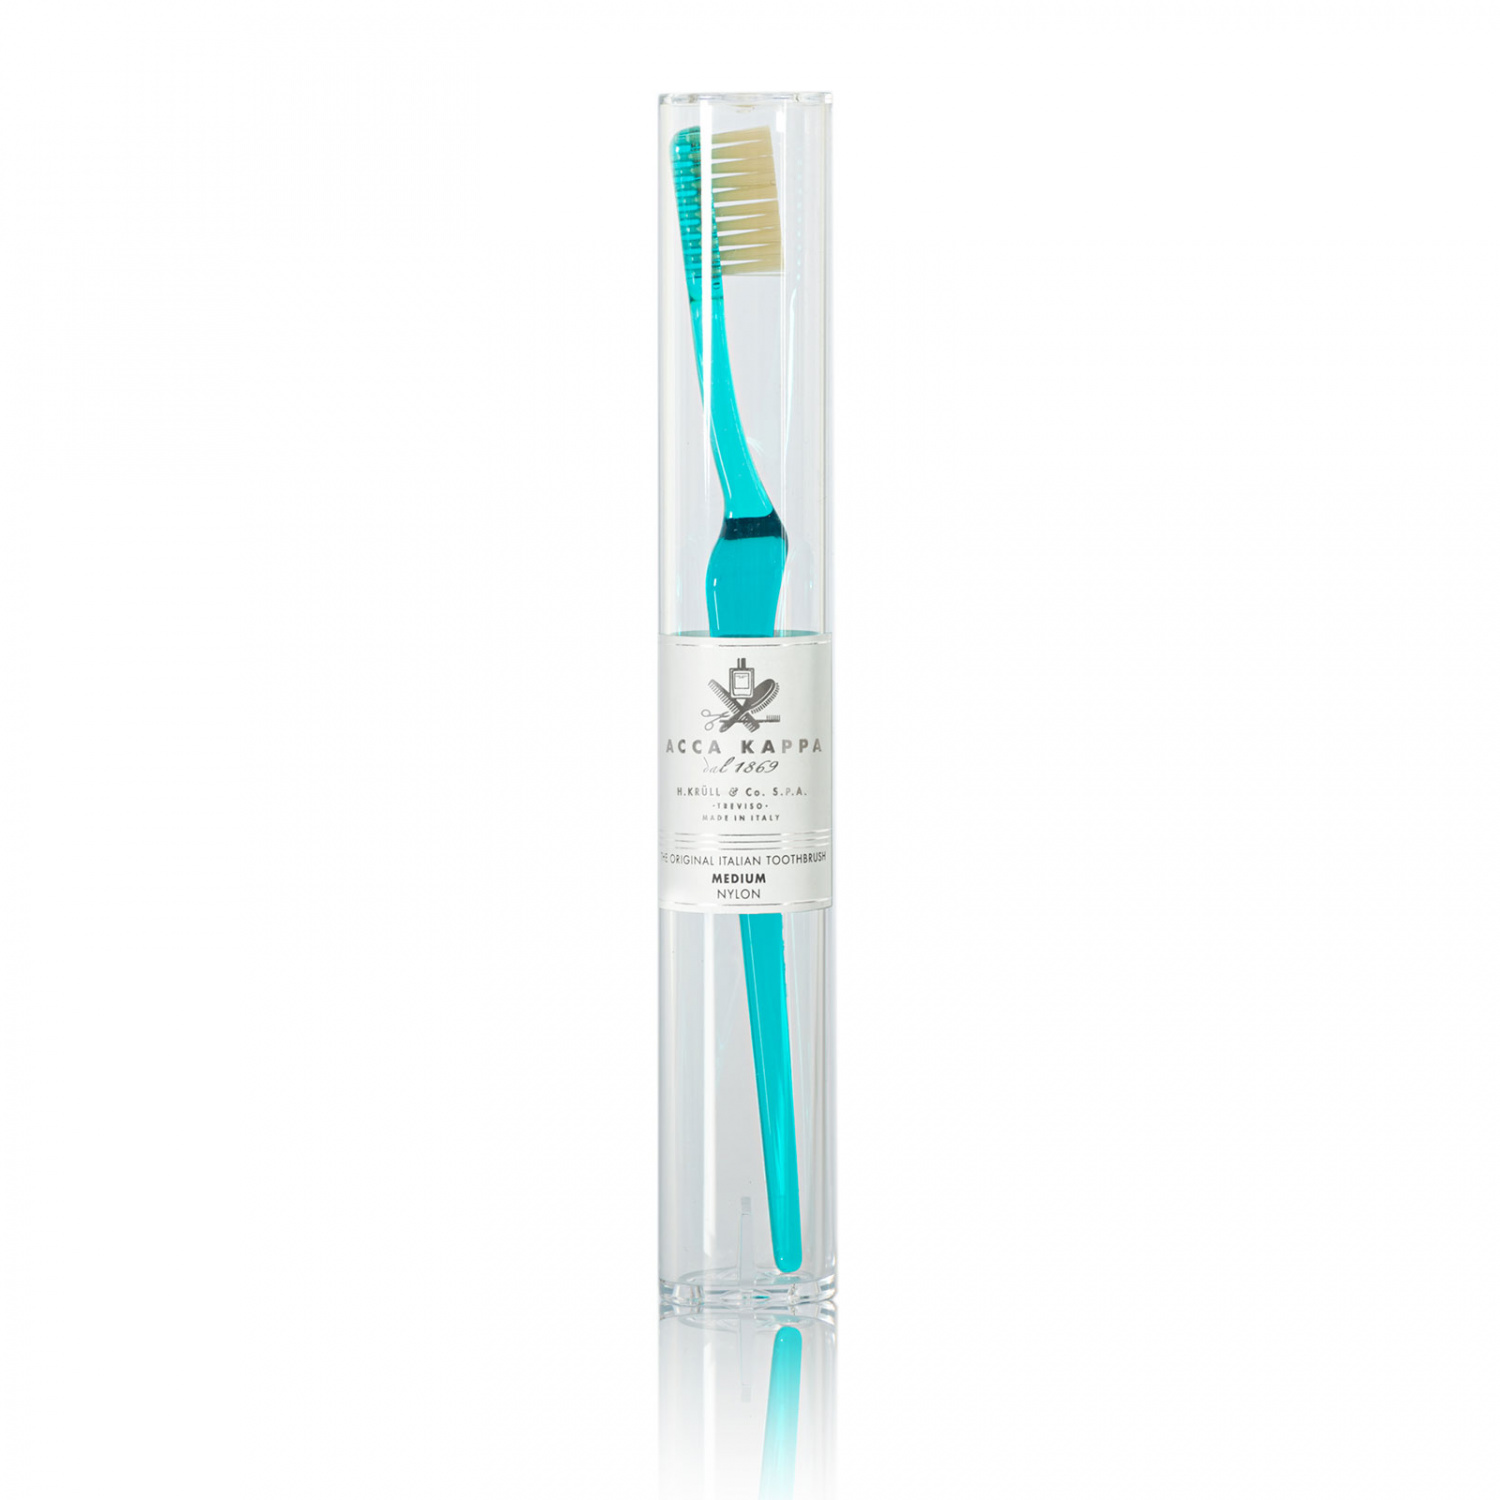 Acca Kappa Lympio Toothbrush Medium Nylon Turquoise - интернет-магазин профессиональной косметики Spadream, изображение 38810